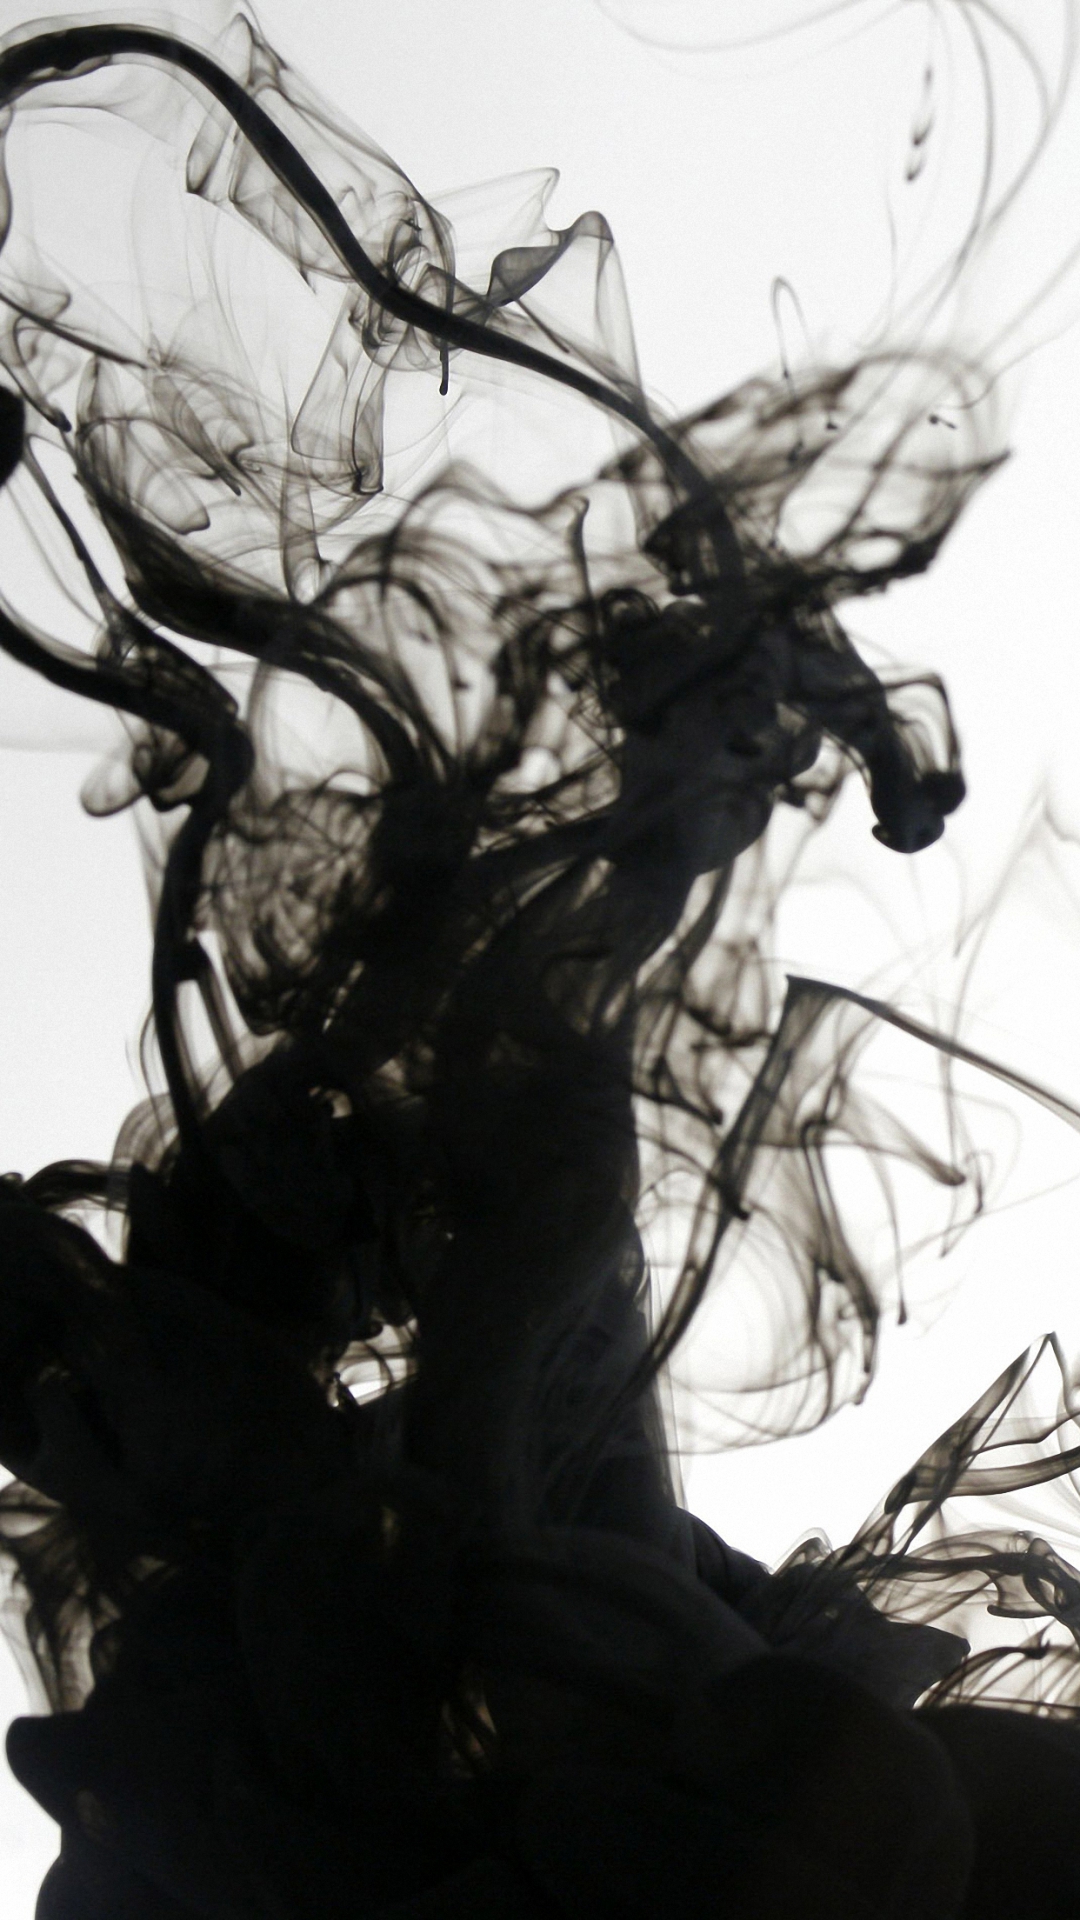 Abstract Black Smoke iPhone 6s Wallpaper HD